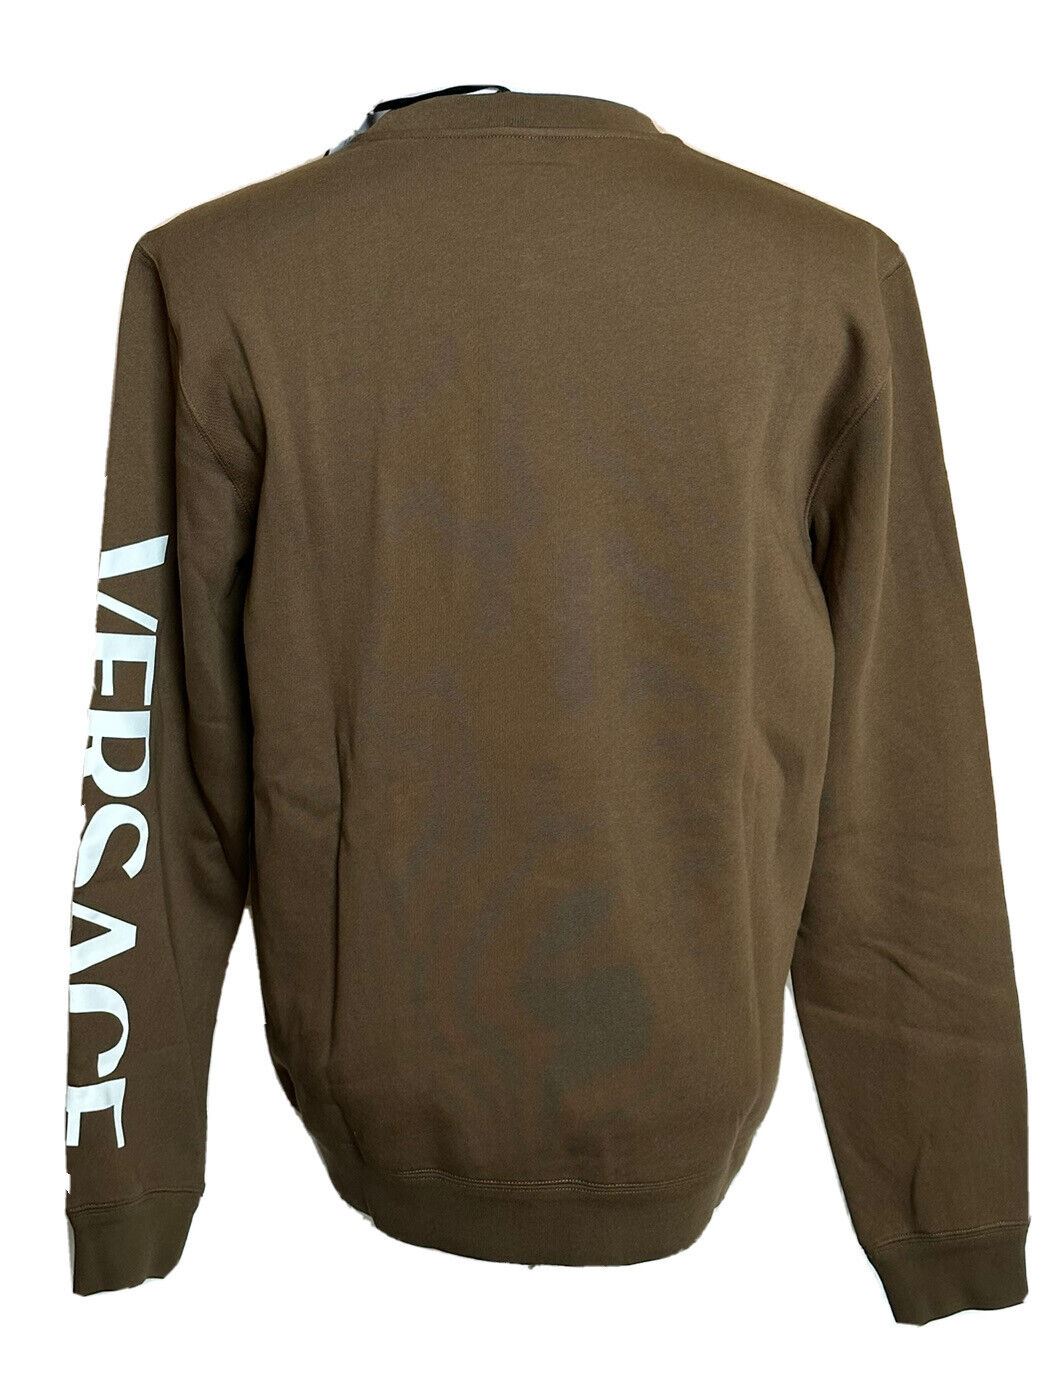 Neu mit Etikett: 850 $ Versace Medusa Renaissance Khaki Baumwoll-Sweatshirt XS 1008282 